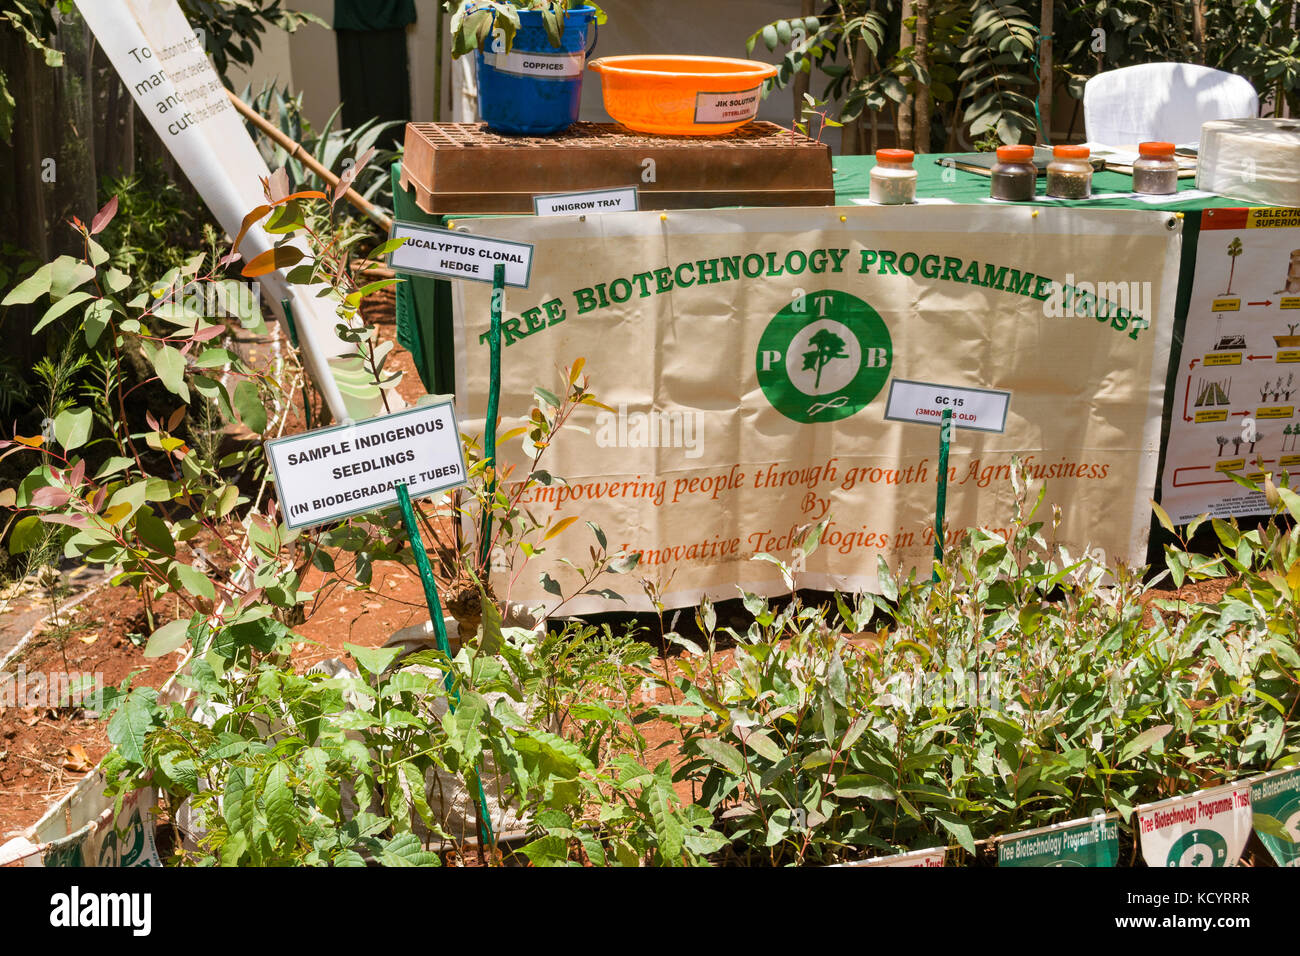 Tree Biotechnology Programme Trust display, Nairobi International Trade Fair, Kenya Stock Photo